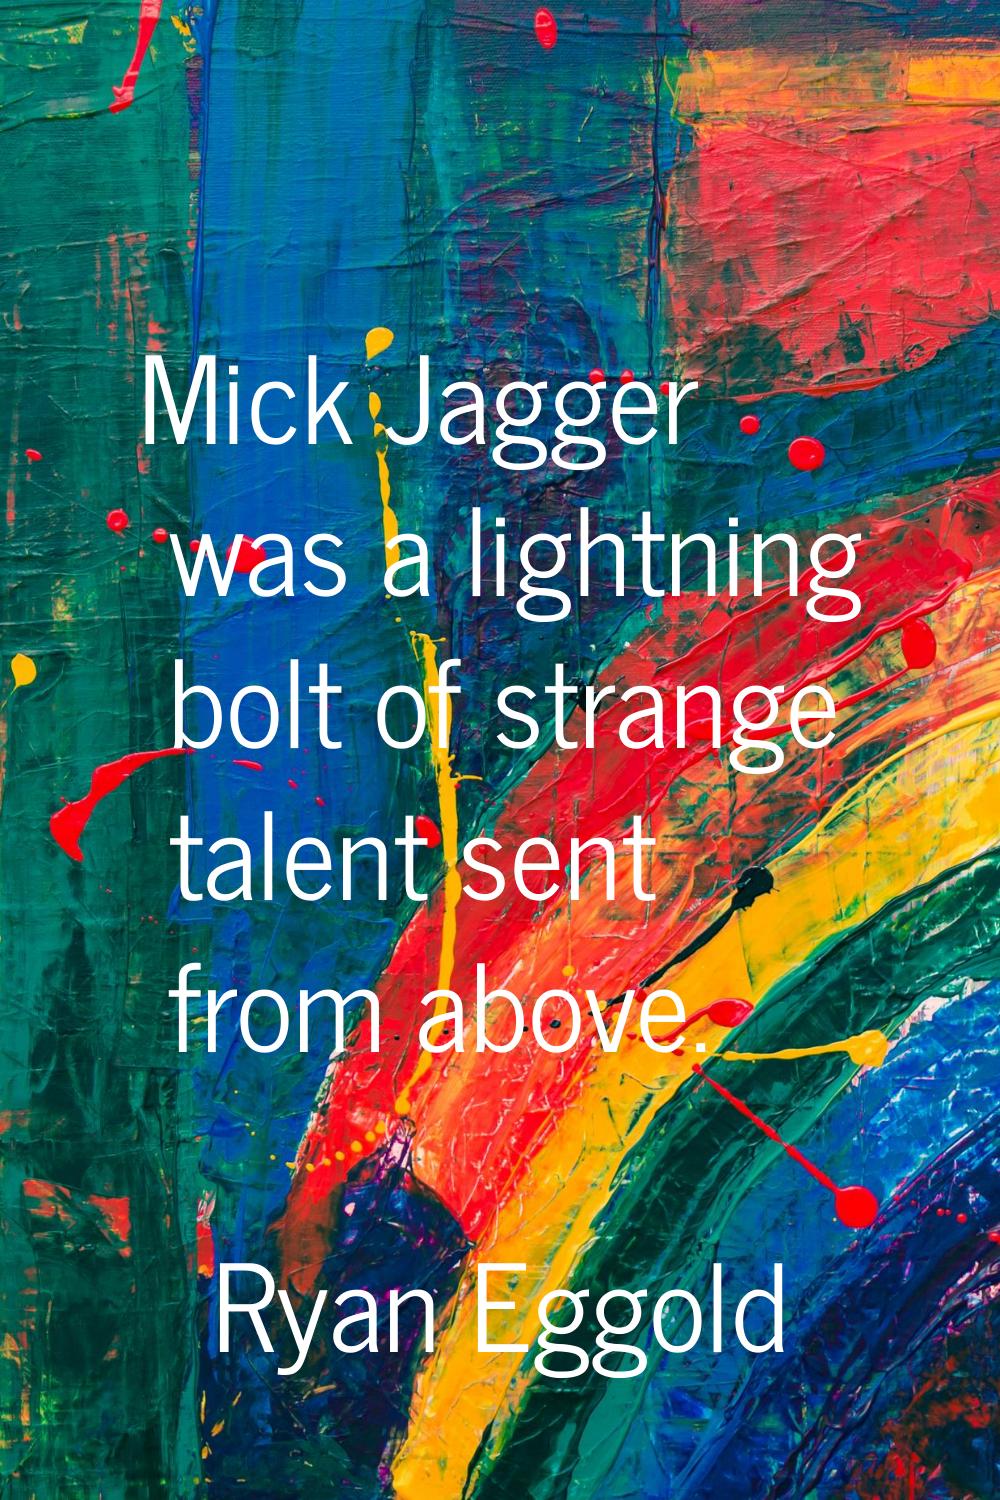 Mick Jagger was a lightning bolt of strange talent sent from above.